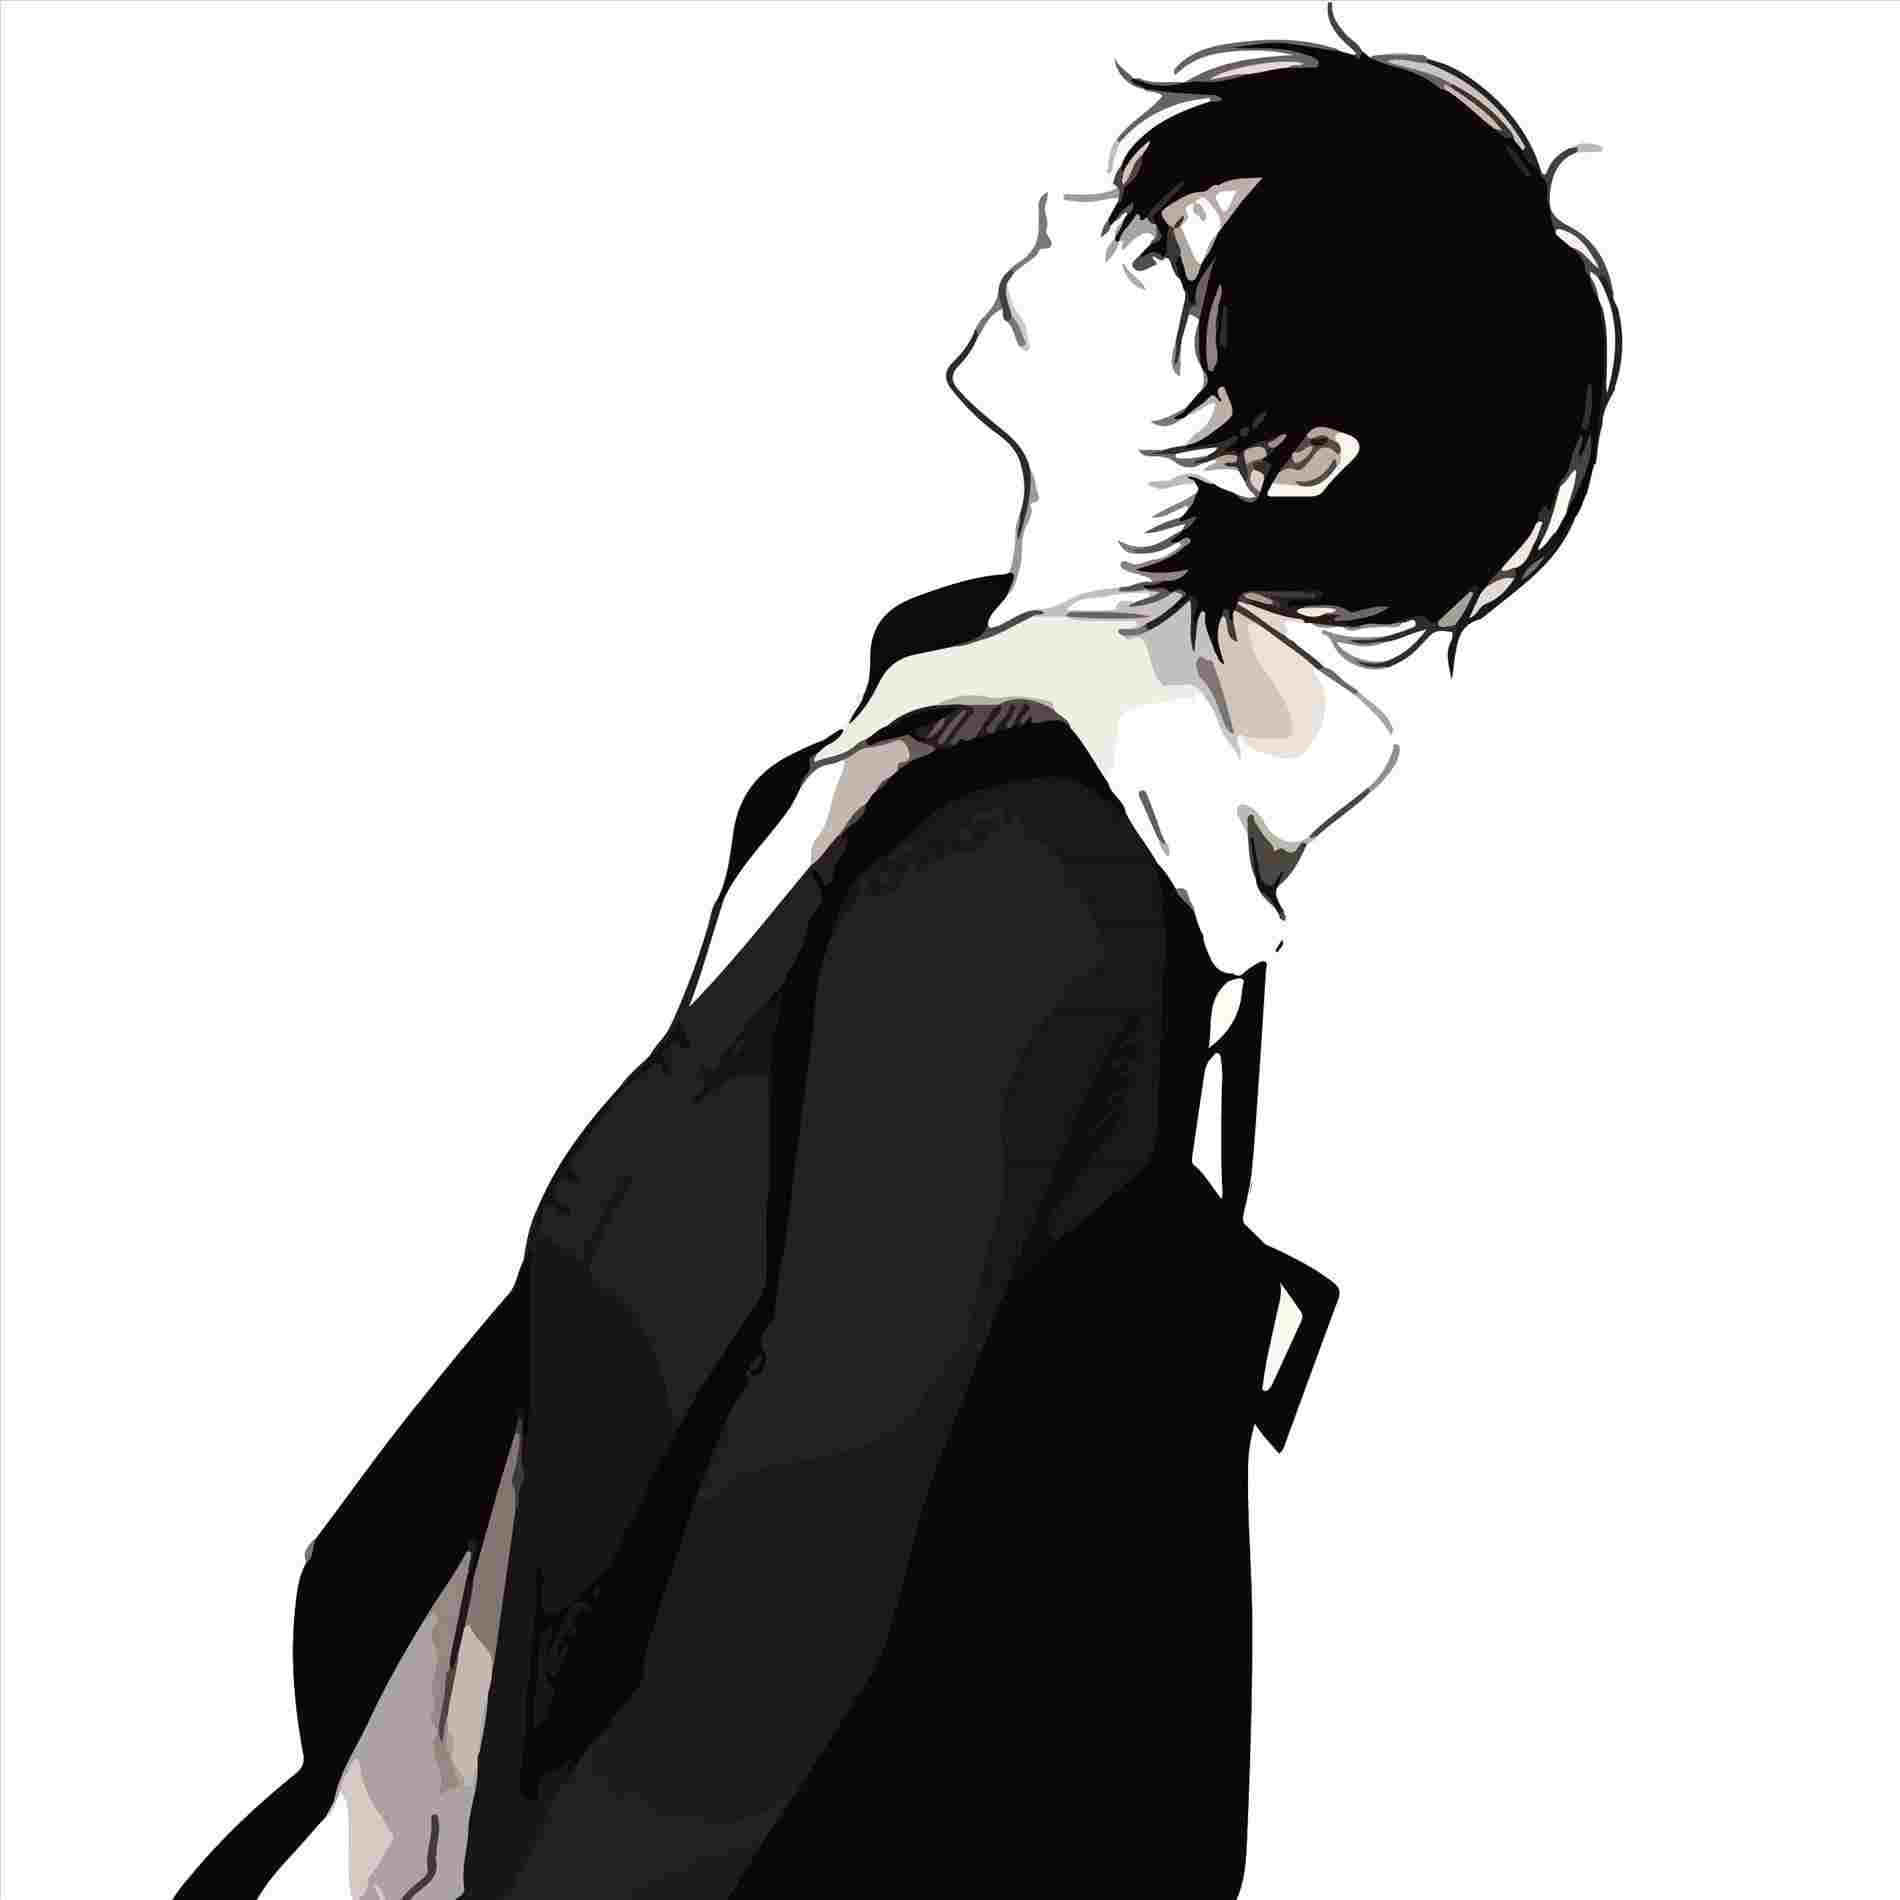 Sad Depressing Anime Boy Look Up